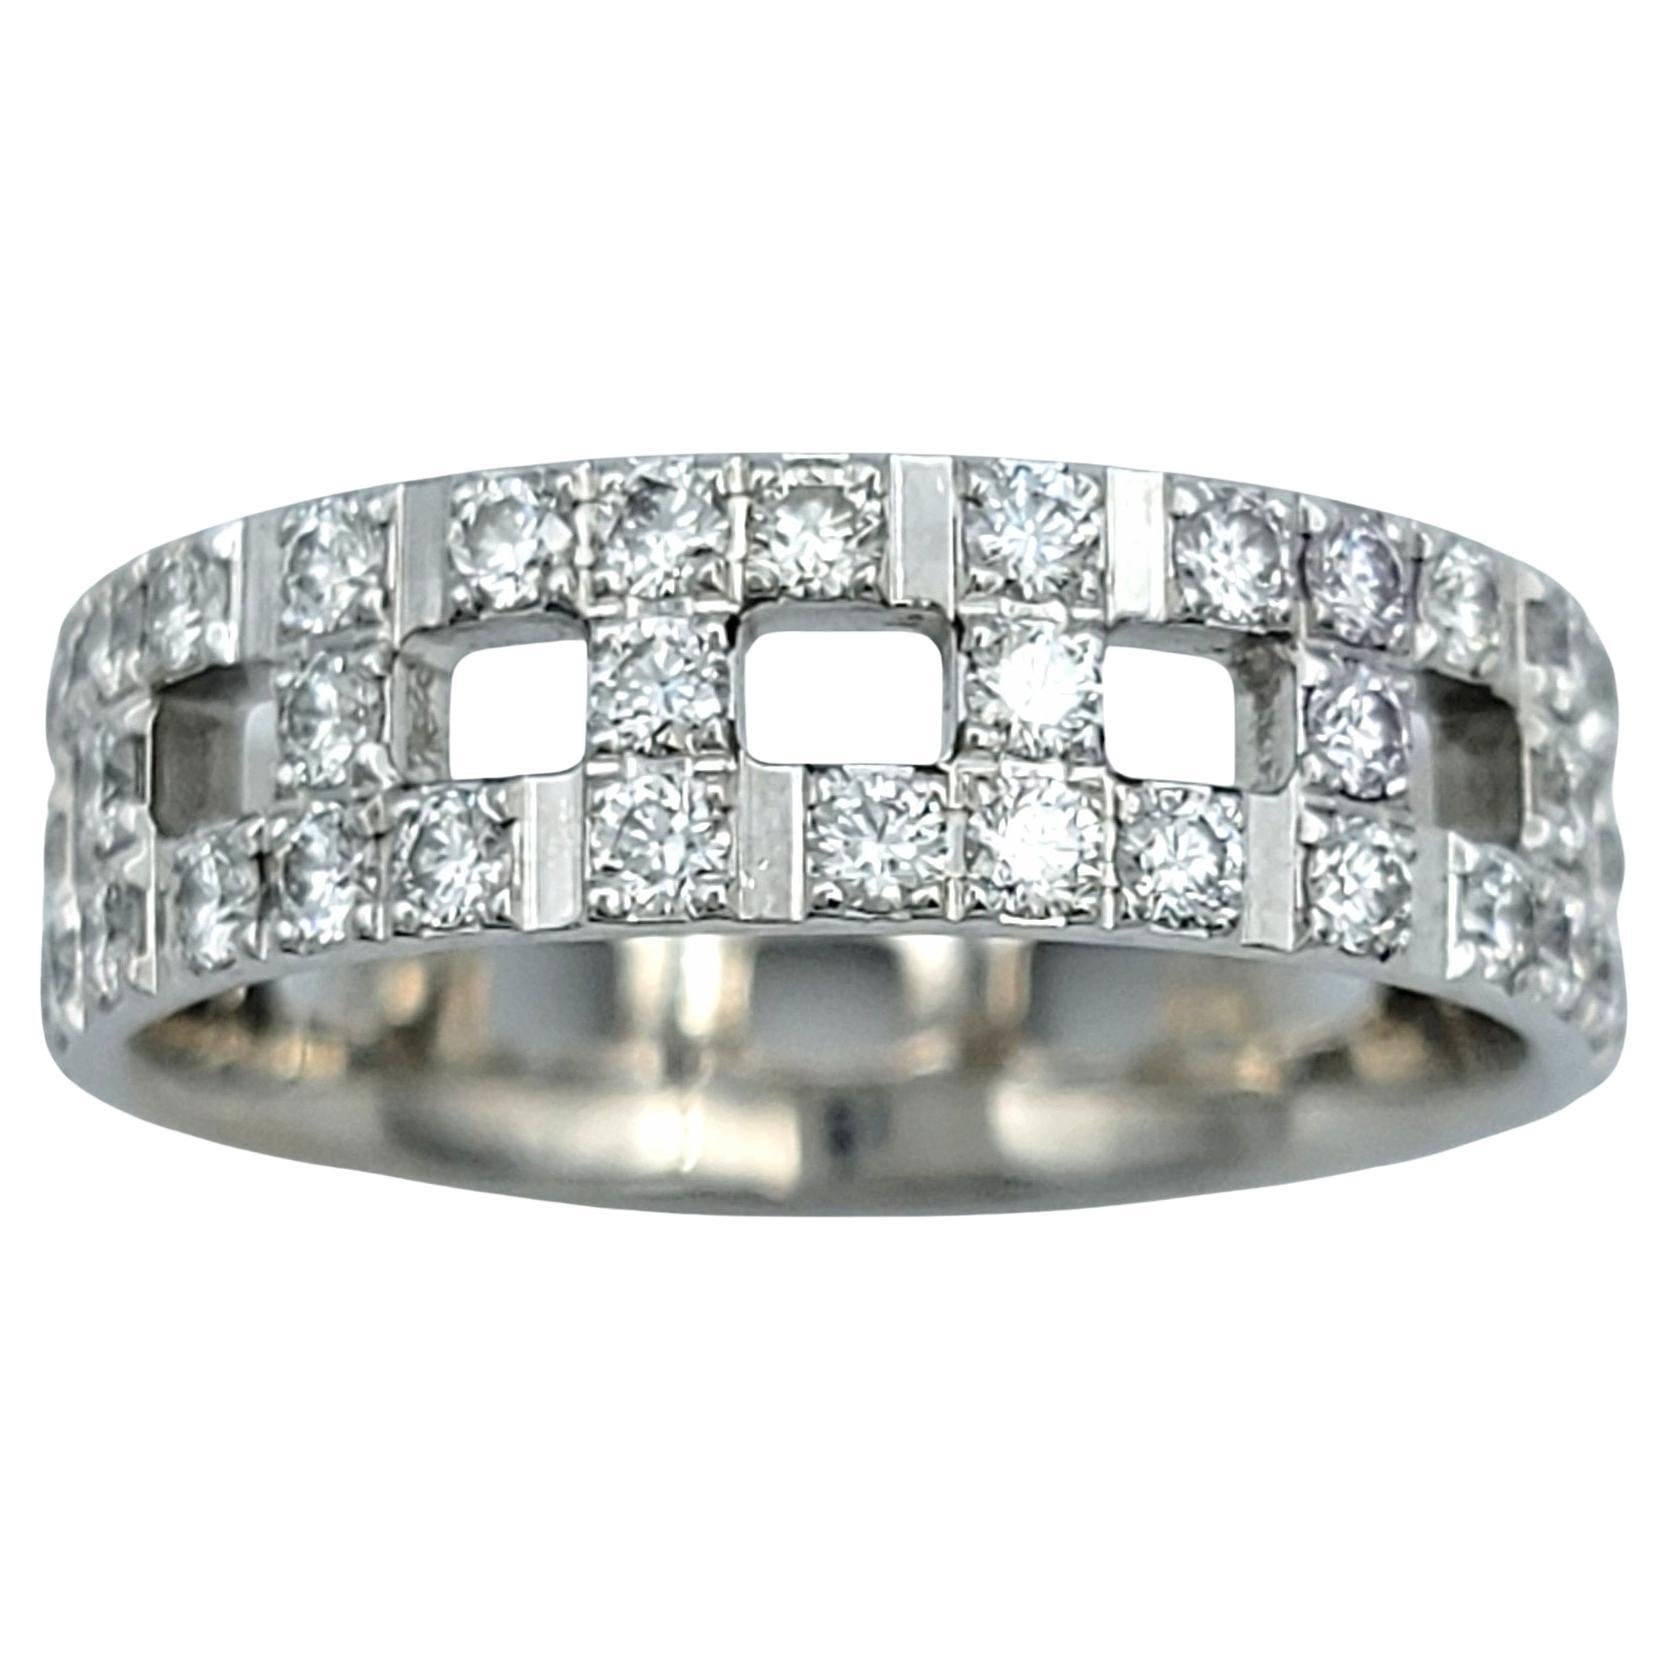 Tiffany & Co. Tiffany T Trueing .99 Karat Total Pavé Diamond Band Ring in 18K Gold im Angebot